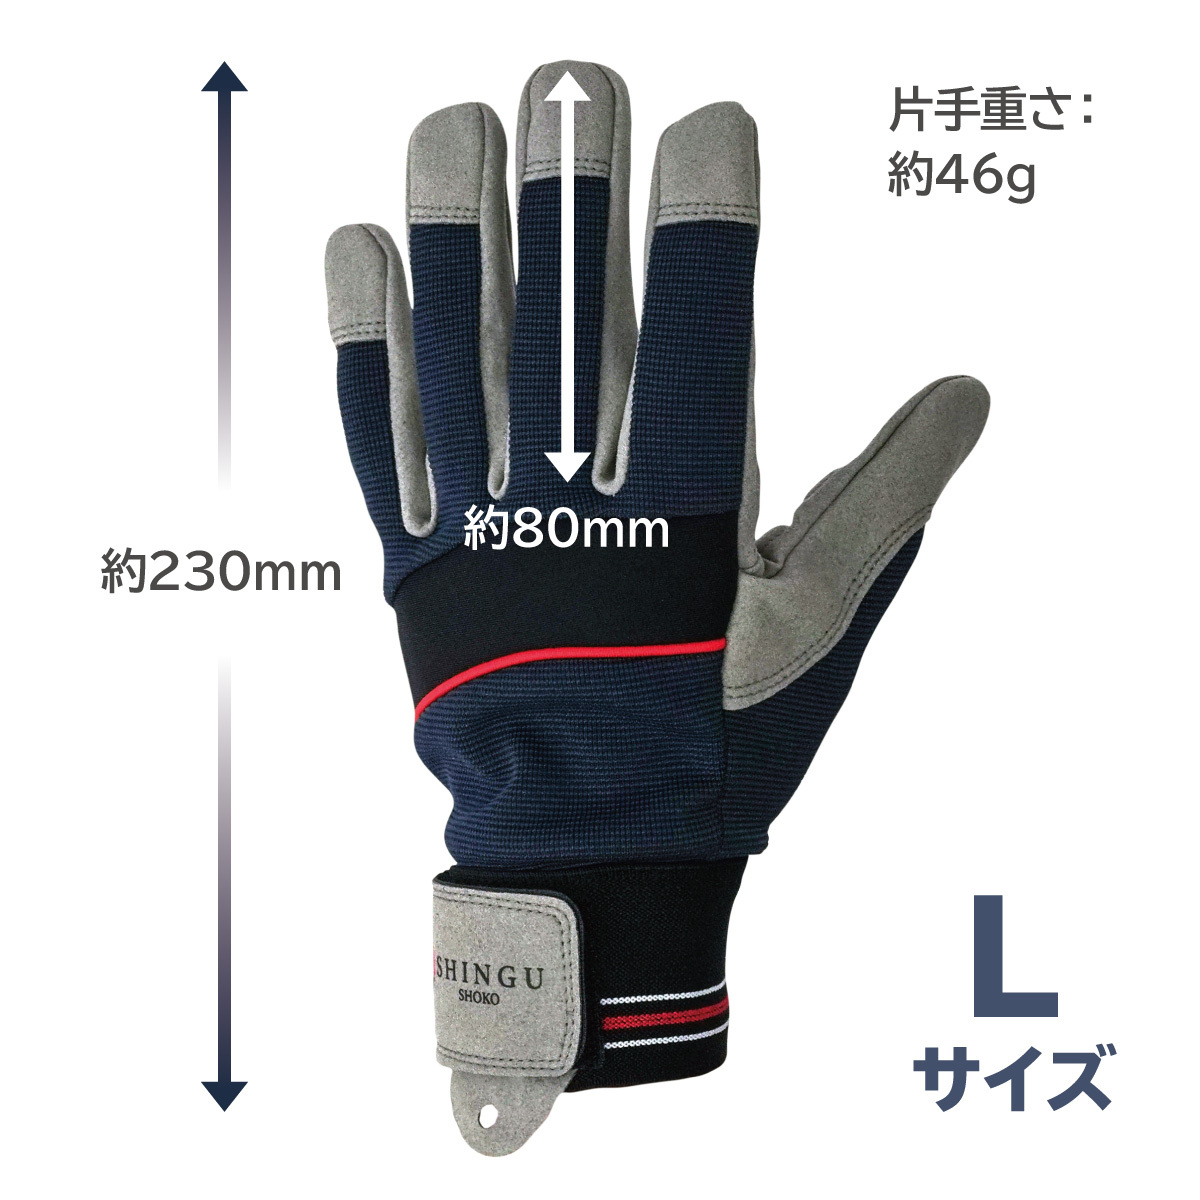 SHINGU oscillation reduction gloves L size cushion pad built-in kala navigation attaching 